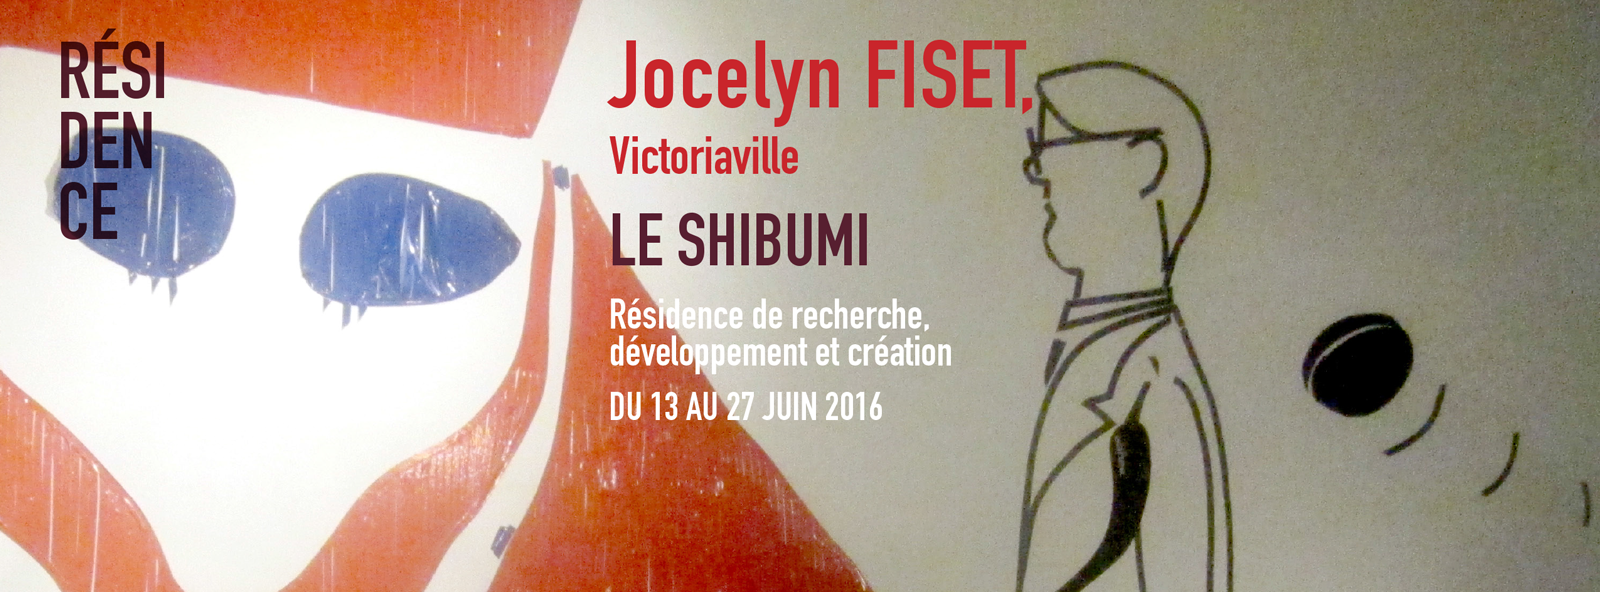 Jocelyn FISET, Victoriaville | LE SHIBUMI